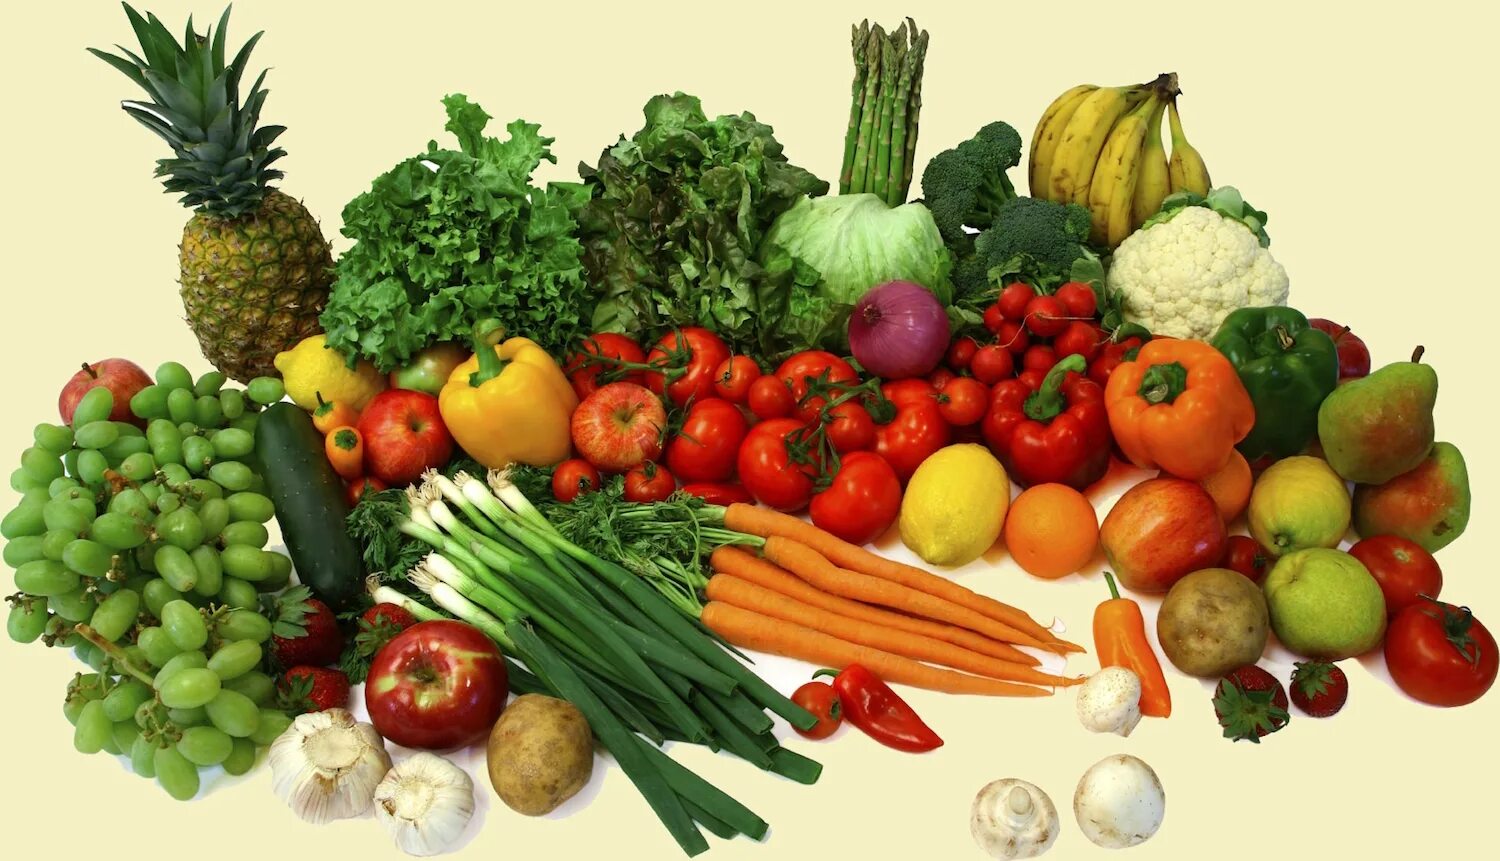 C y et. Овощи и фрукты. Витамины на тарелке. Растительные продукты. Овощи, фрукты, ягоды.